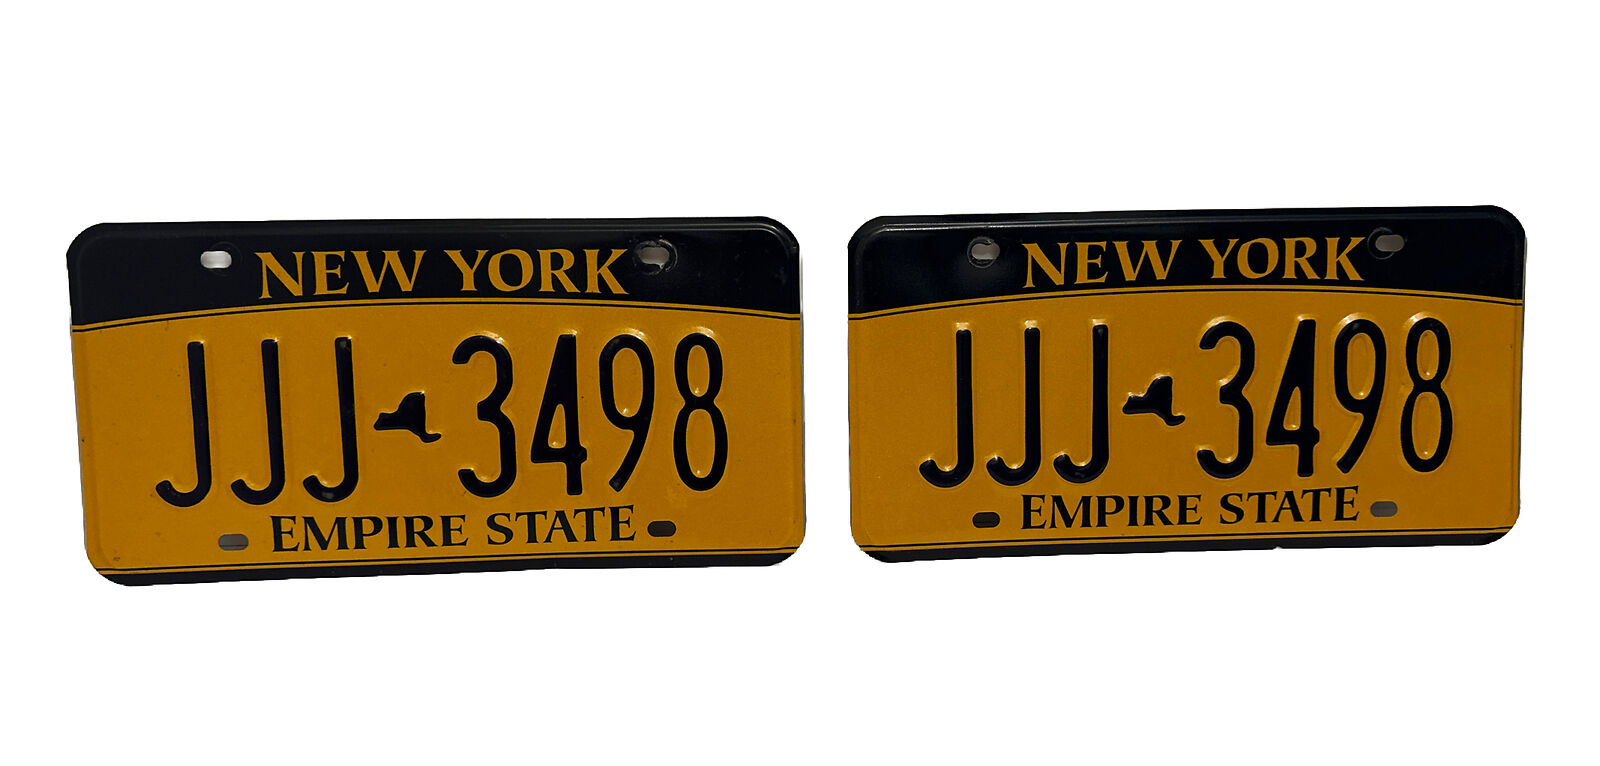 NEW YORK EMPIRE STATE  LICENSE PLATE PAIR - BLUE/GOLD - JJJ 3498